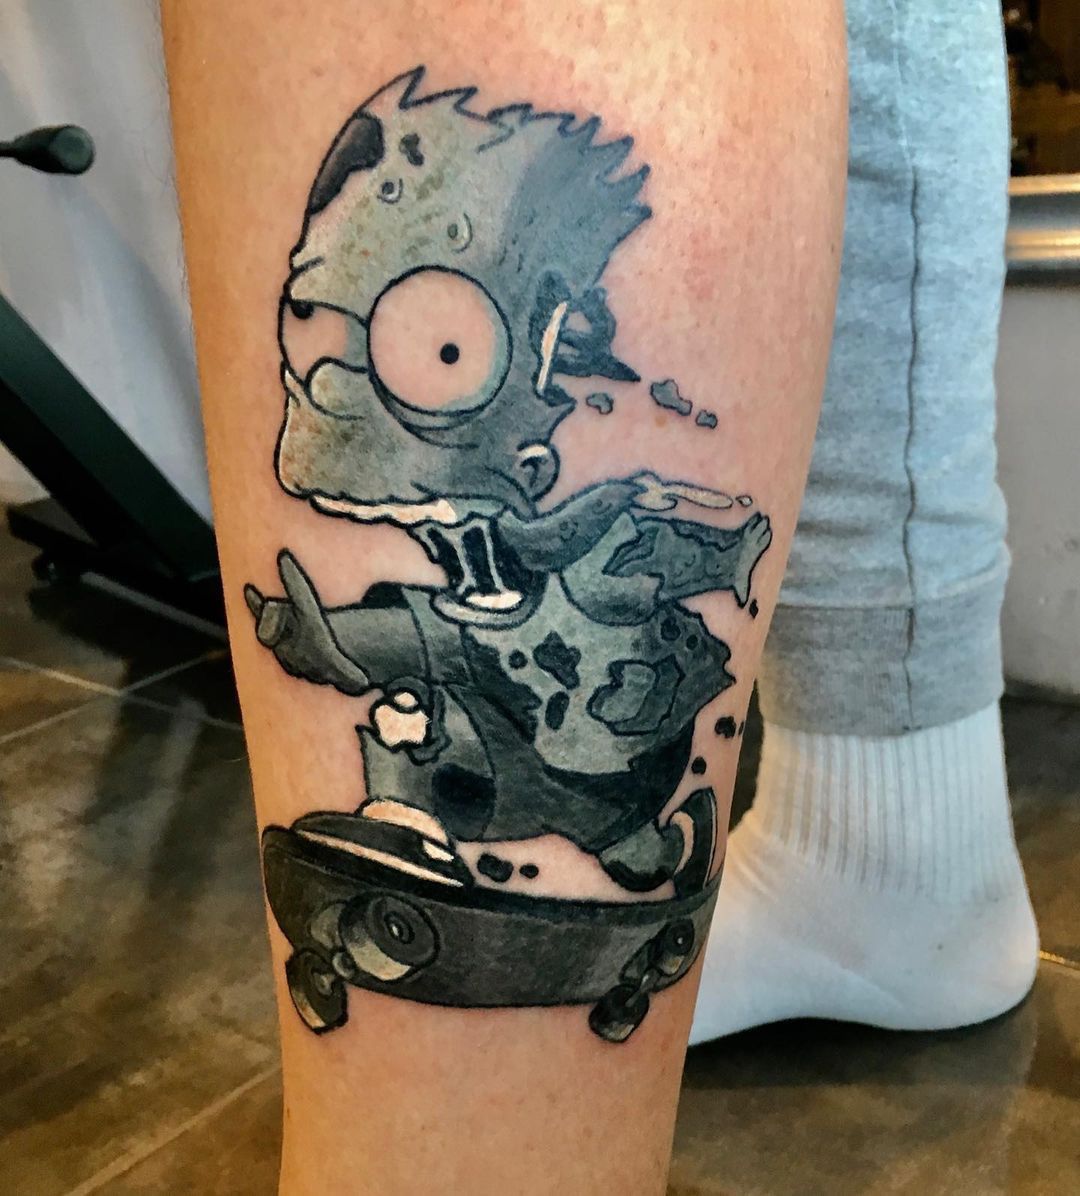 Bart splits on a skateboard tattoo